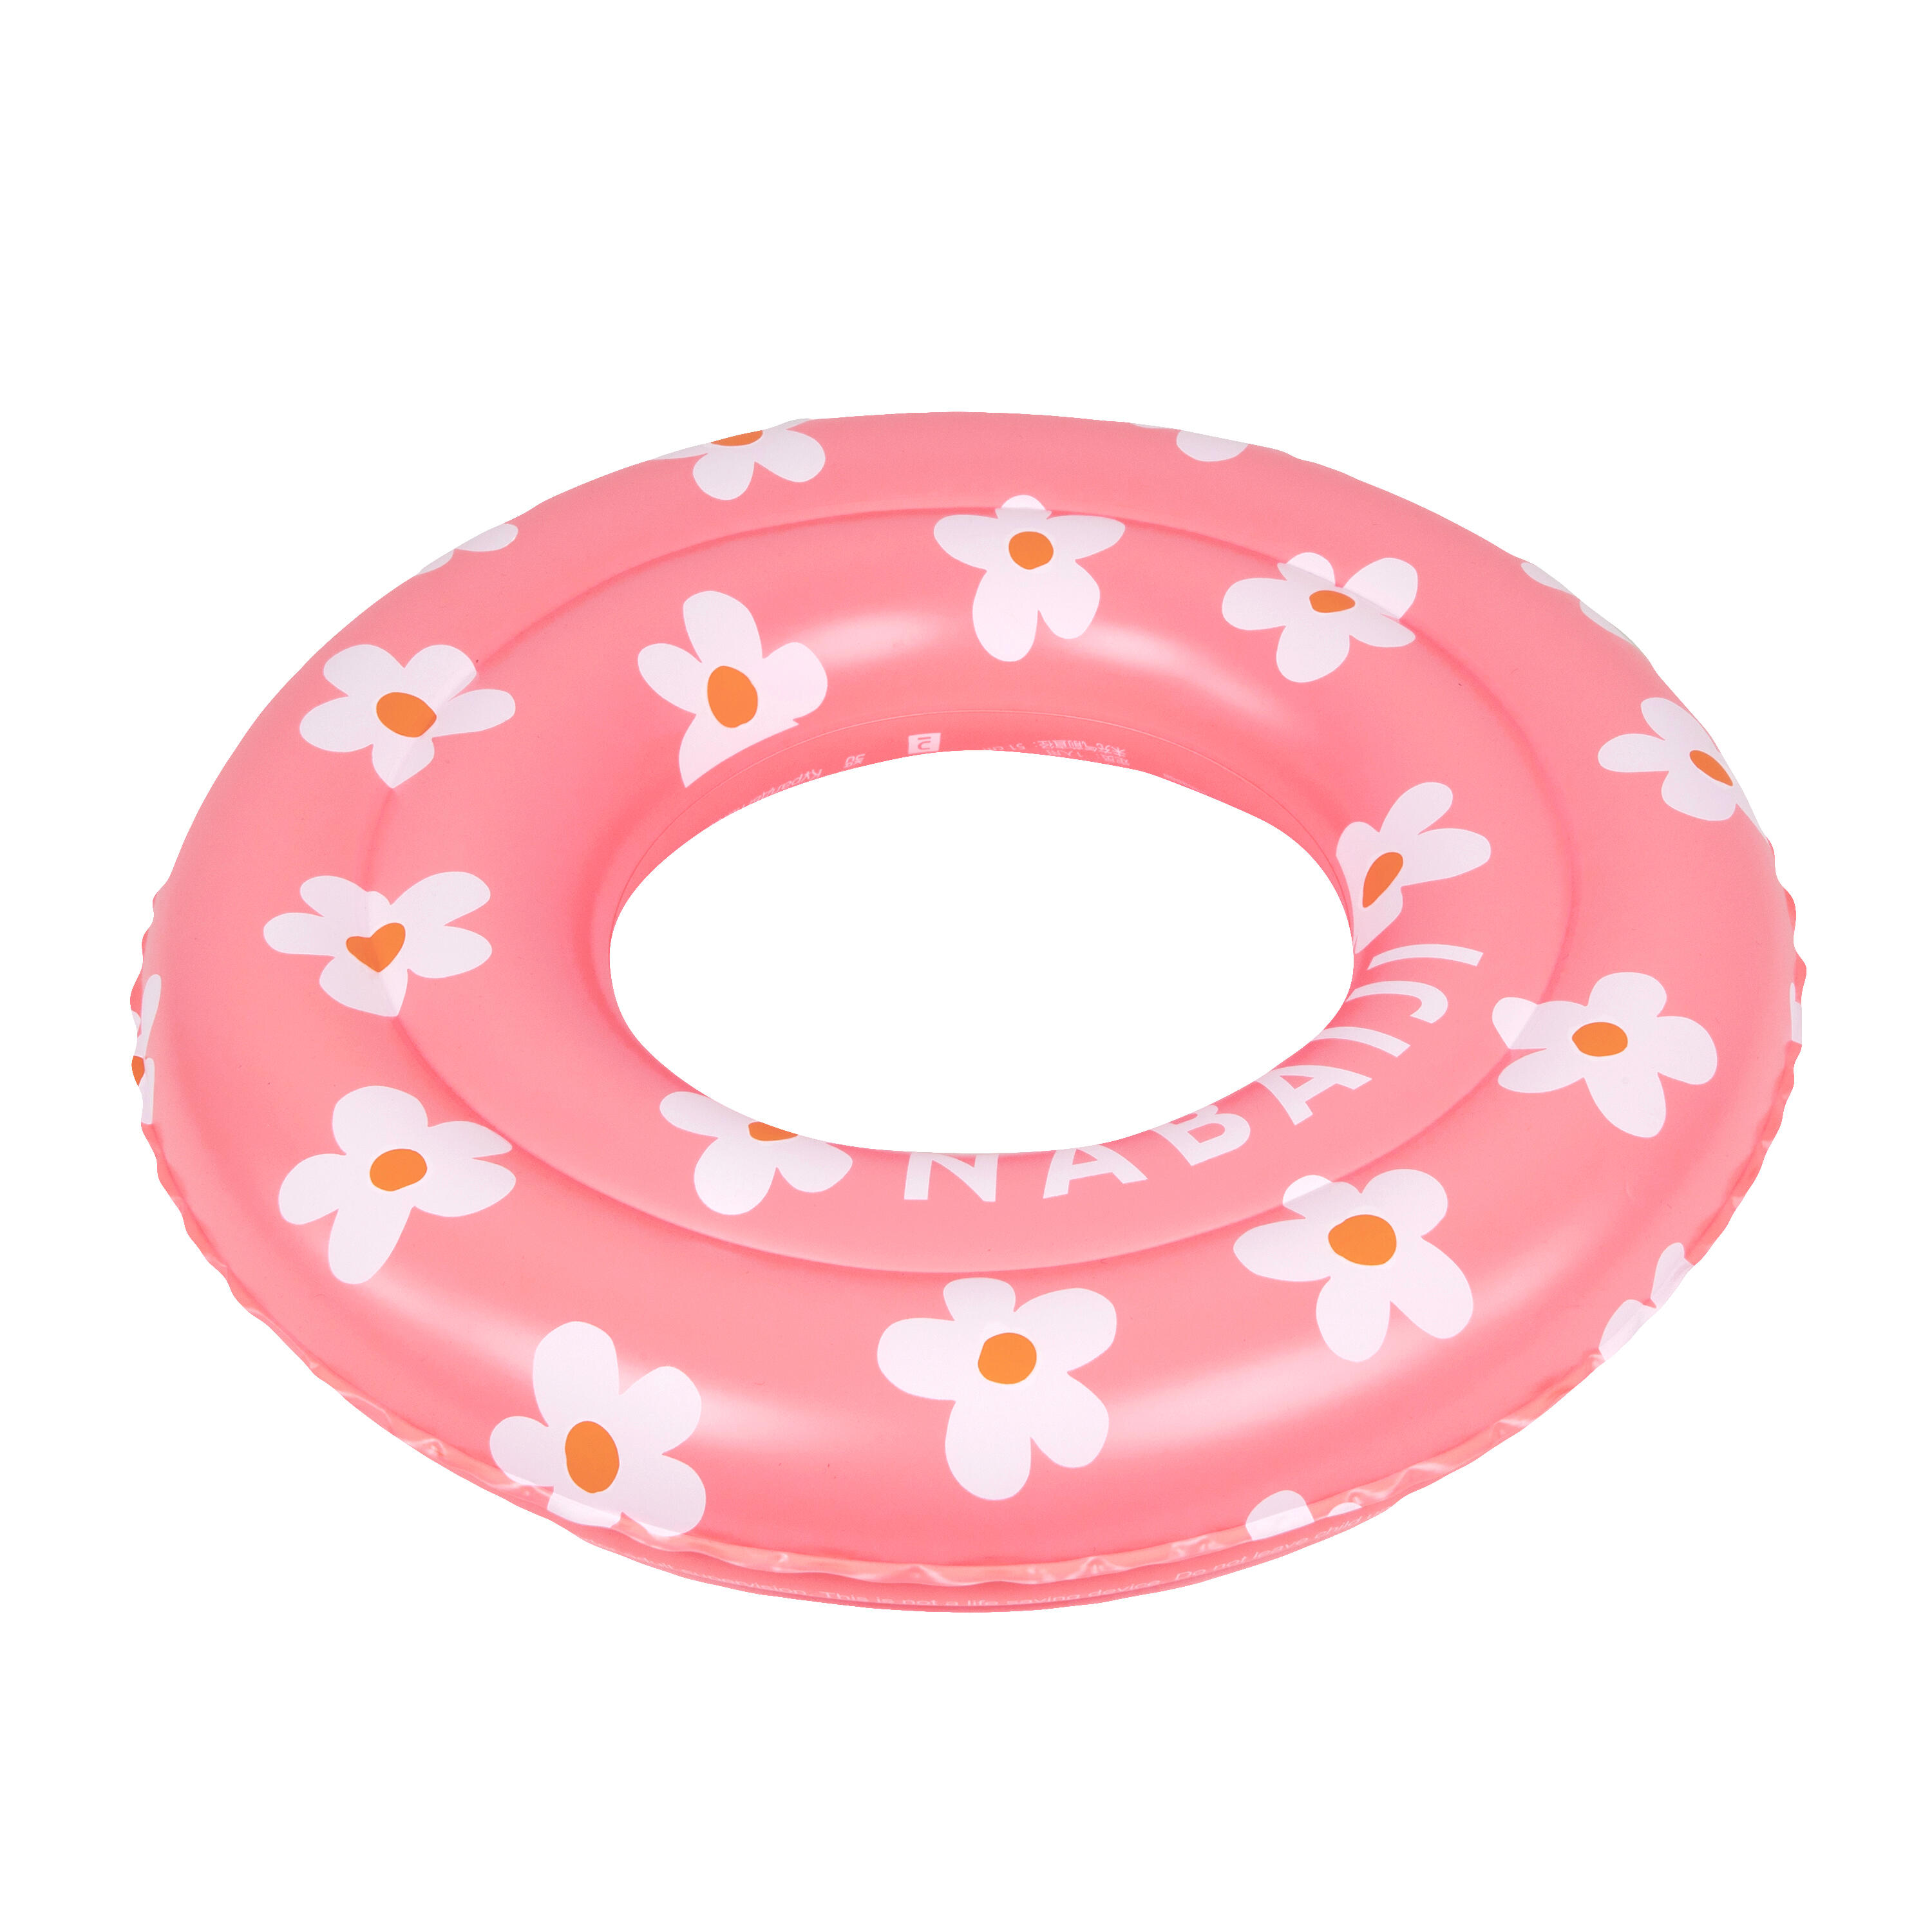 NABAIJI Inflatable Pool Ring 51 cm printed rose FLOWERS